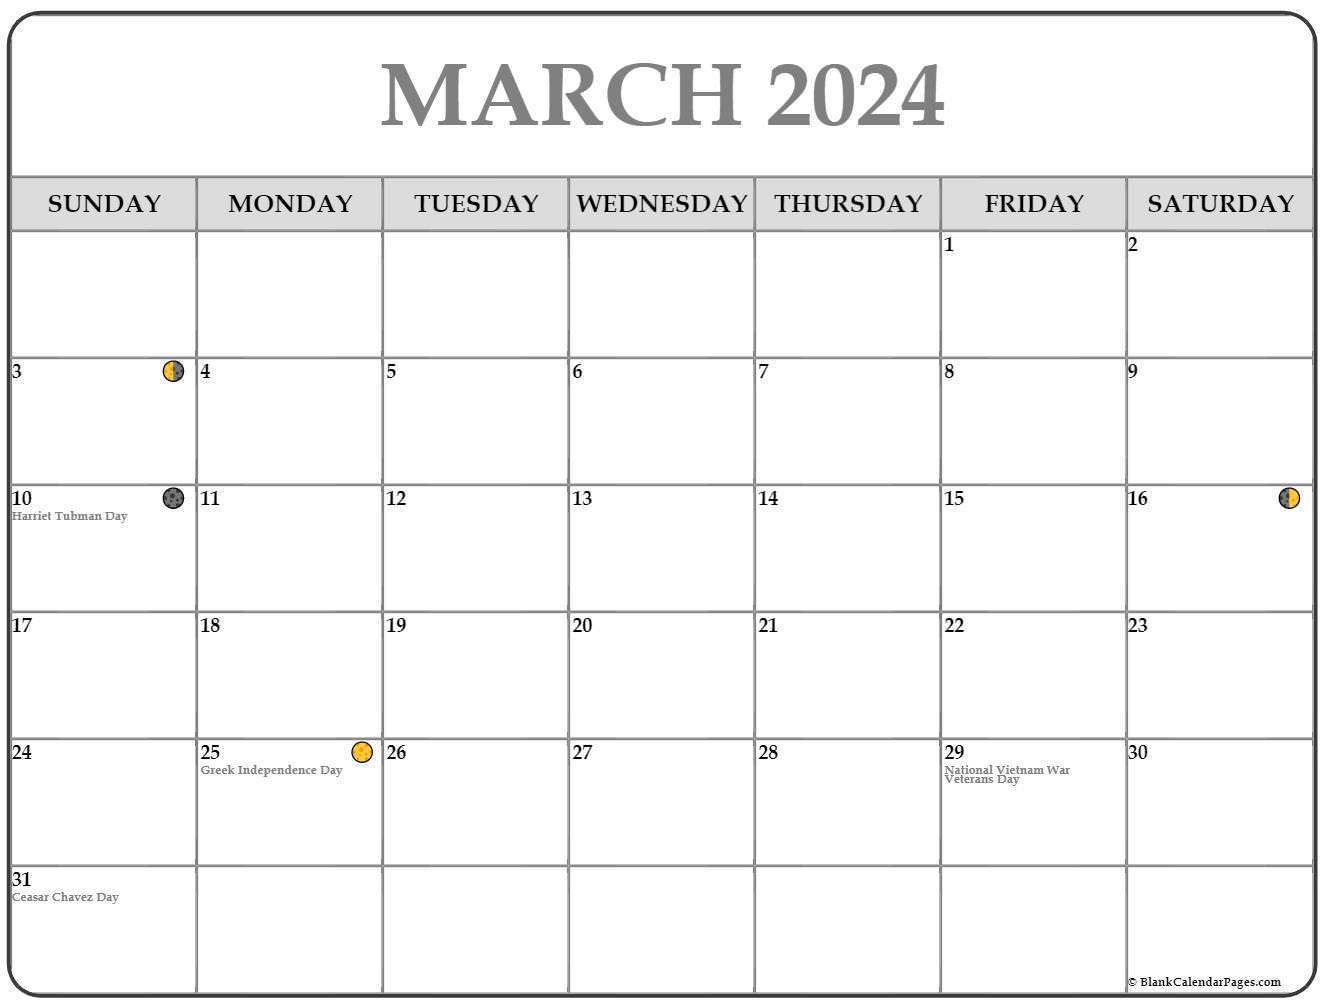 March 2022 Lunar Calendar Moon Phase Calendar